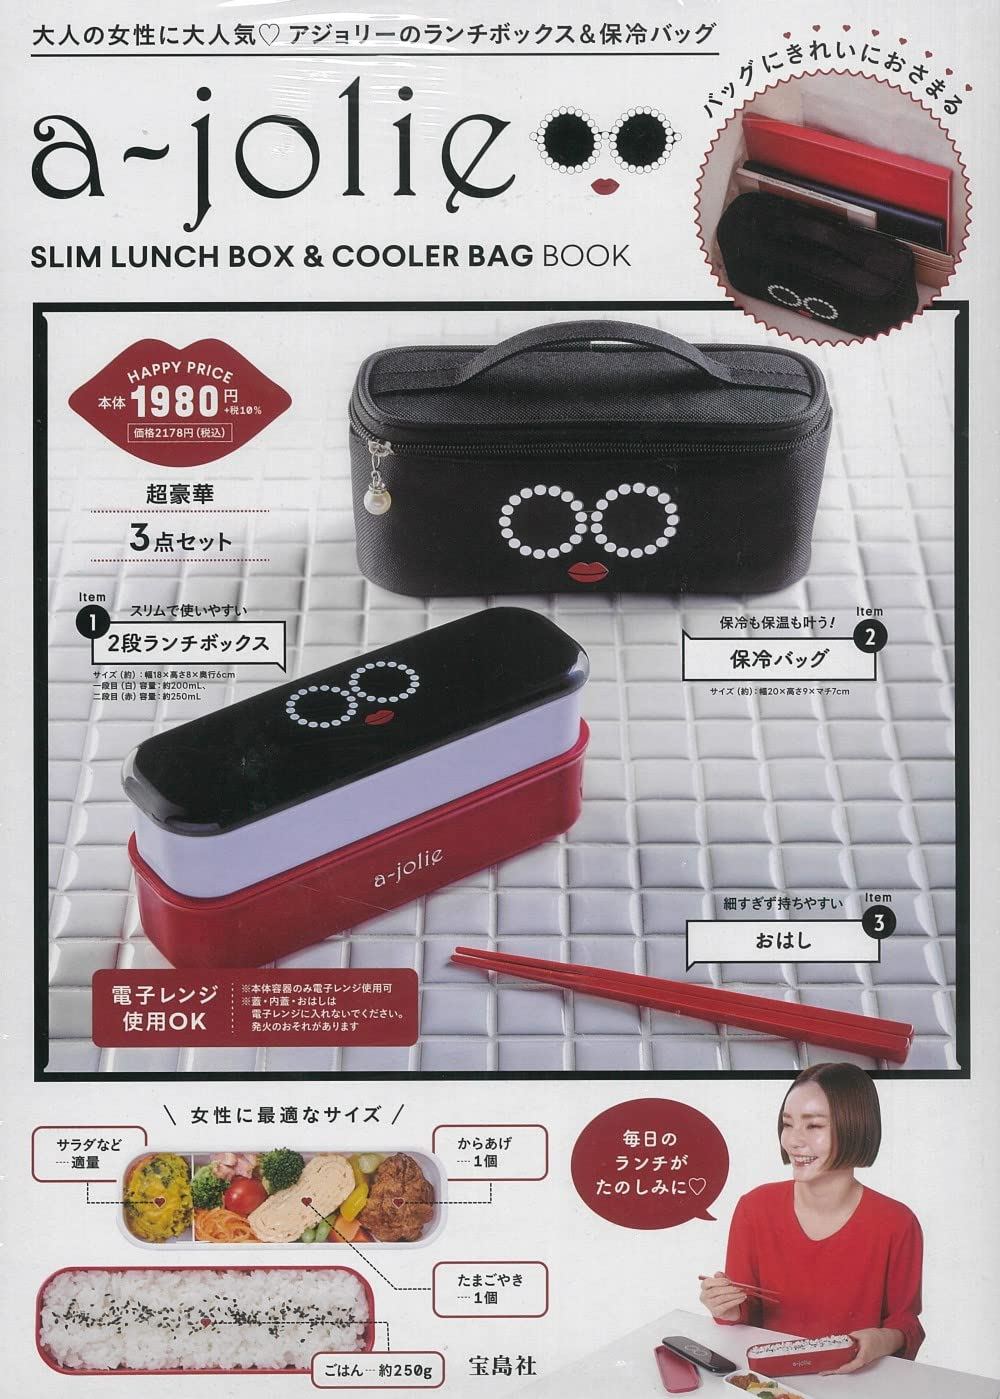 A-jolie Slim Lunch Box & Cooler Bag Book